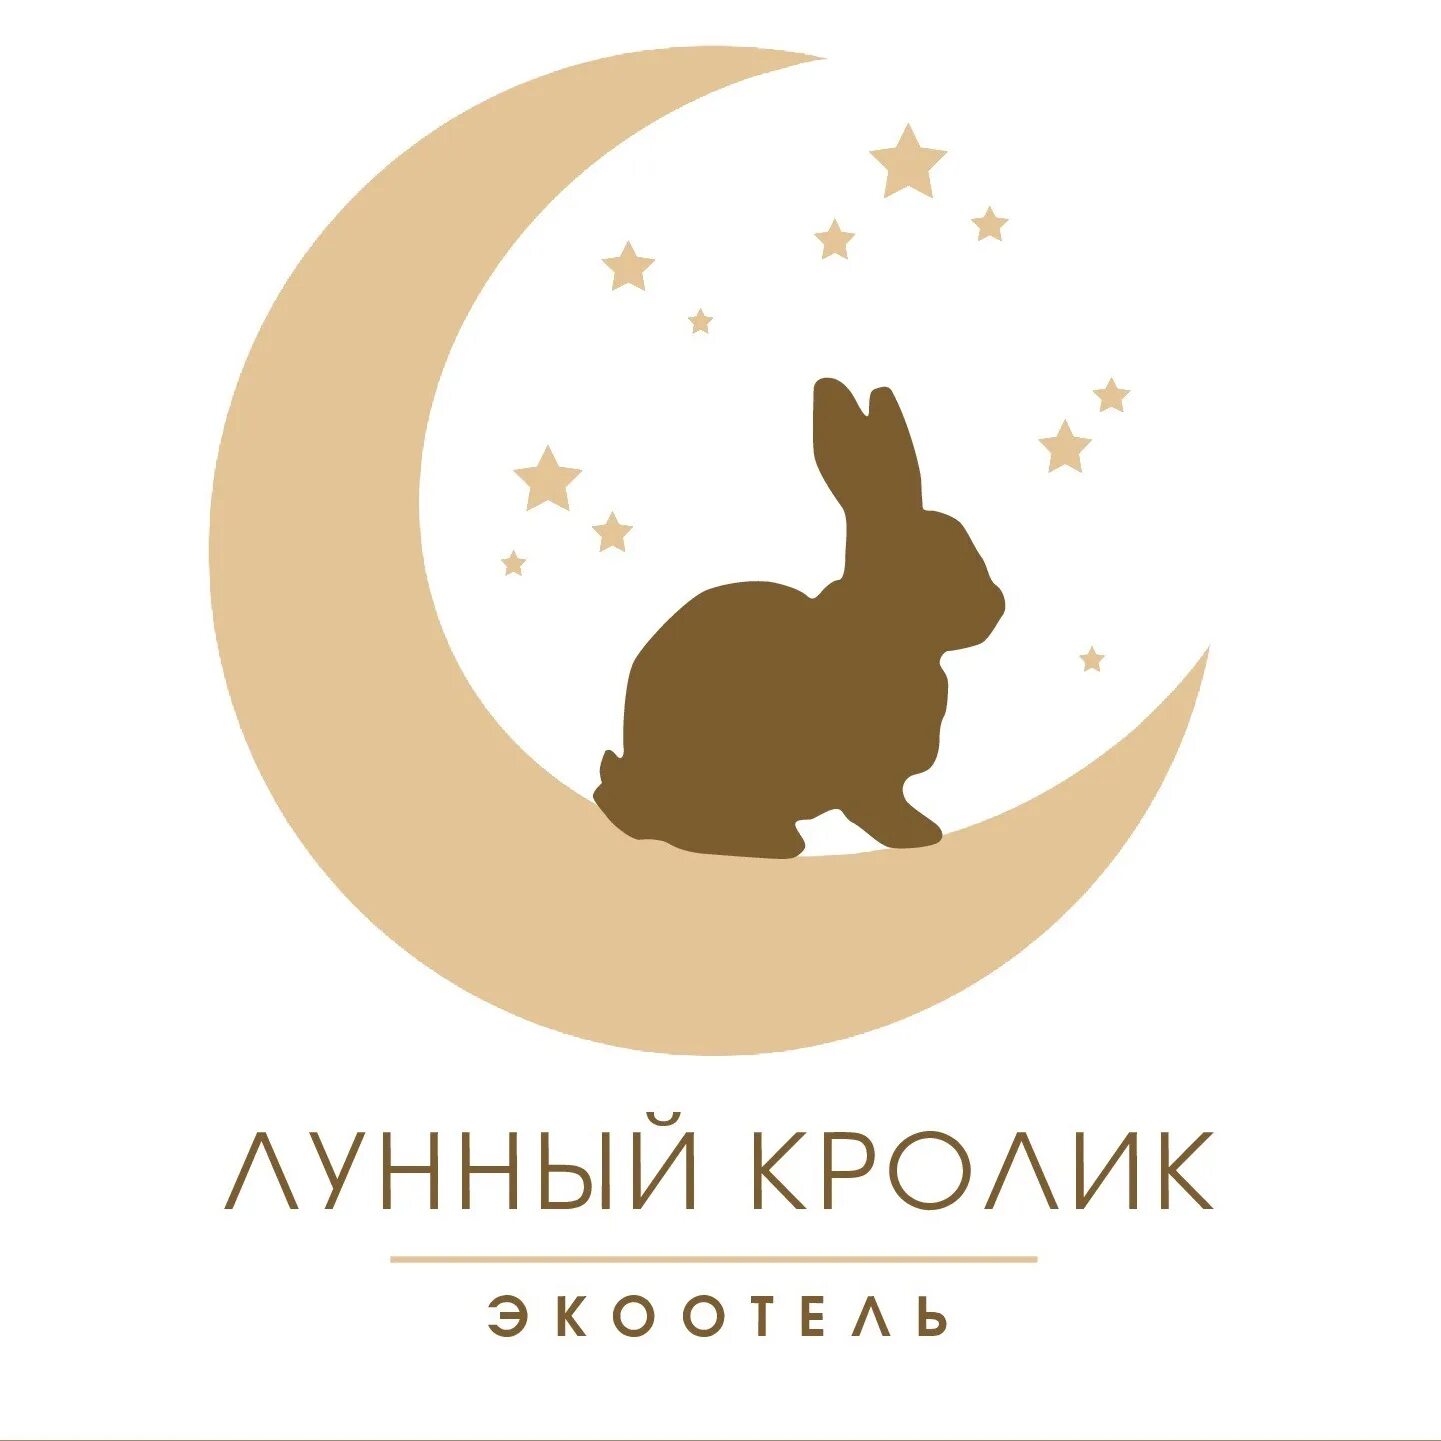 Лунный кролик. Лунный кролик Экоотель. Лунный кролик Легенда. Кролик на Луне. Эко отель лунный кролик